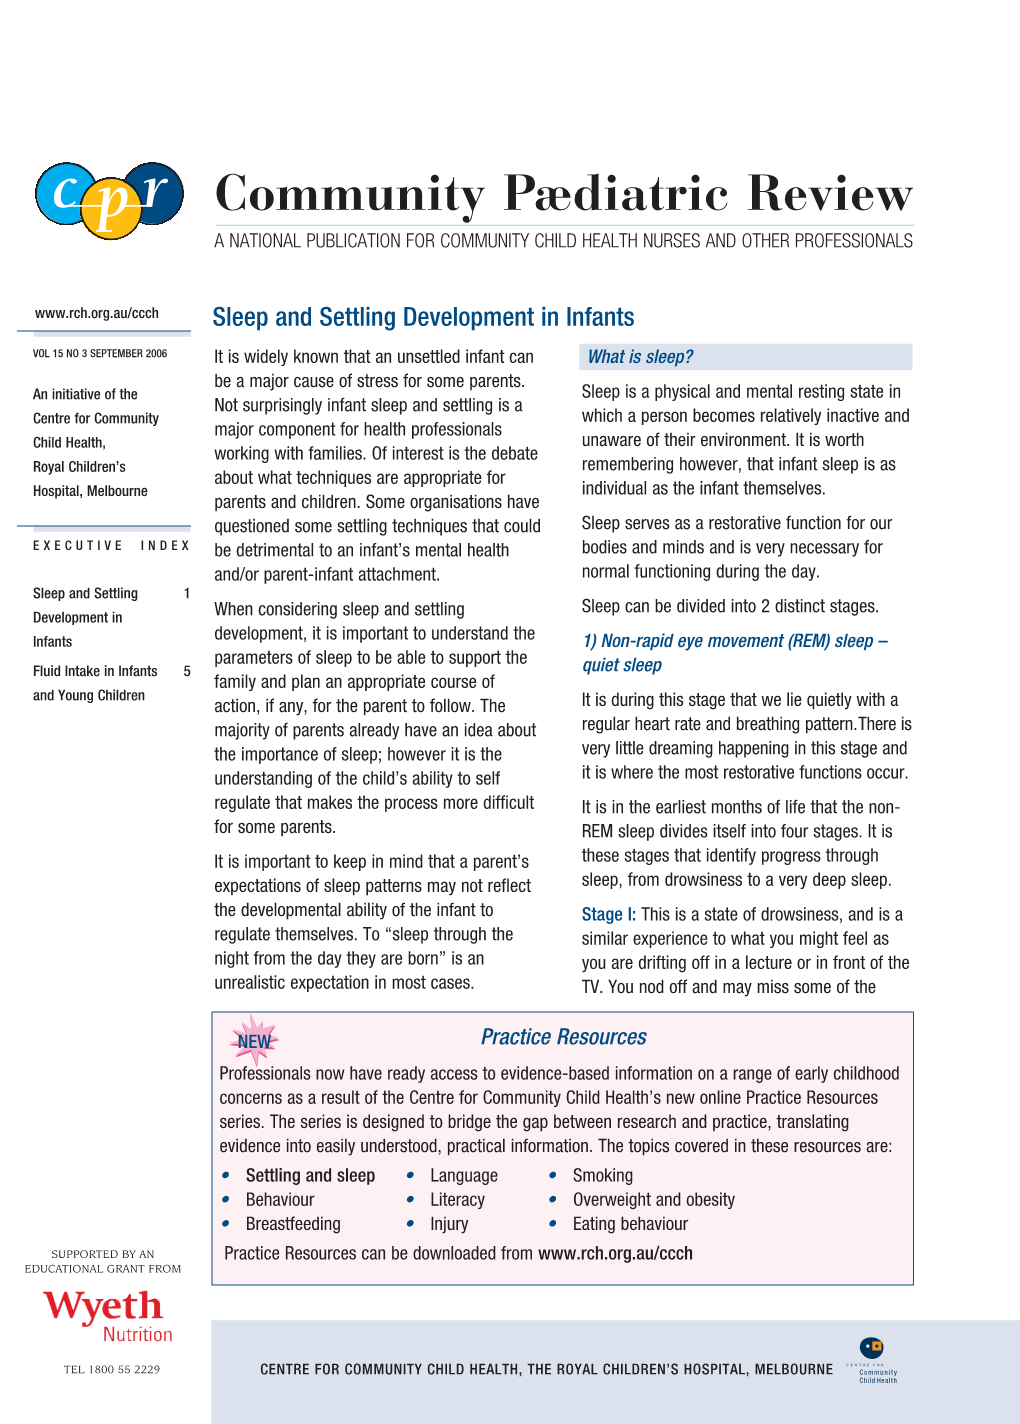 Community Paediatric Review Vol 15 No 3